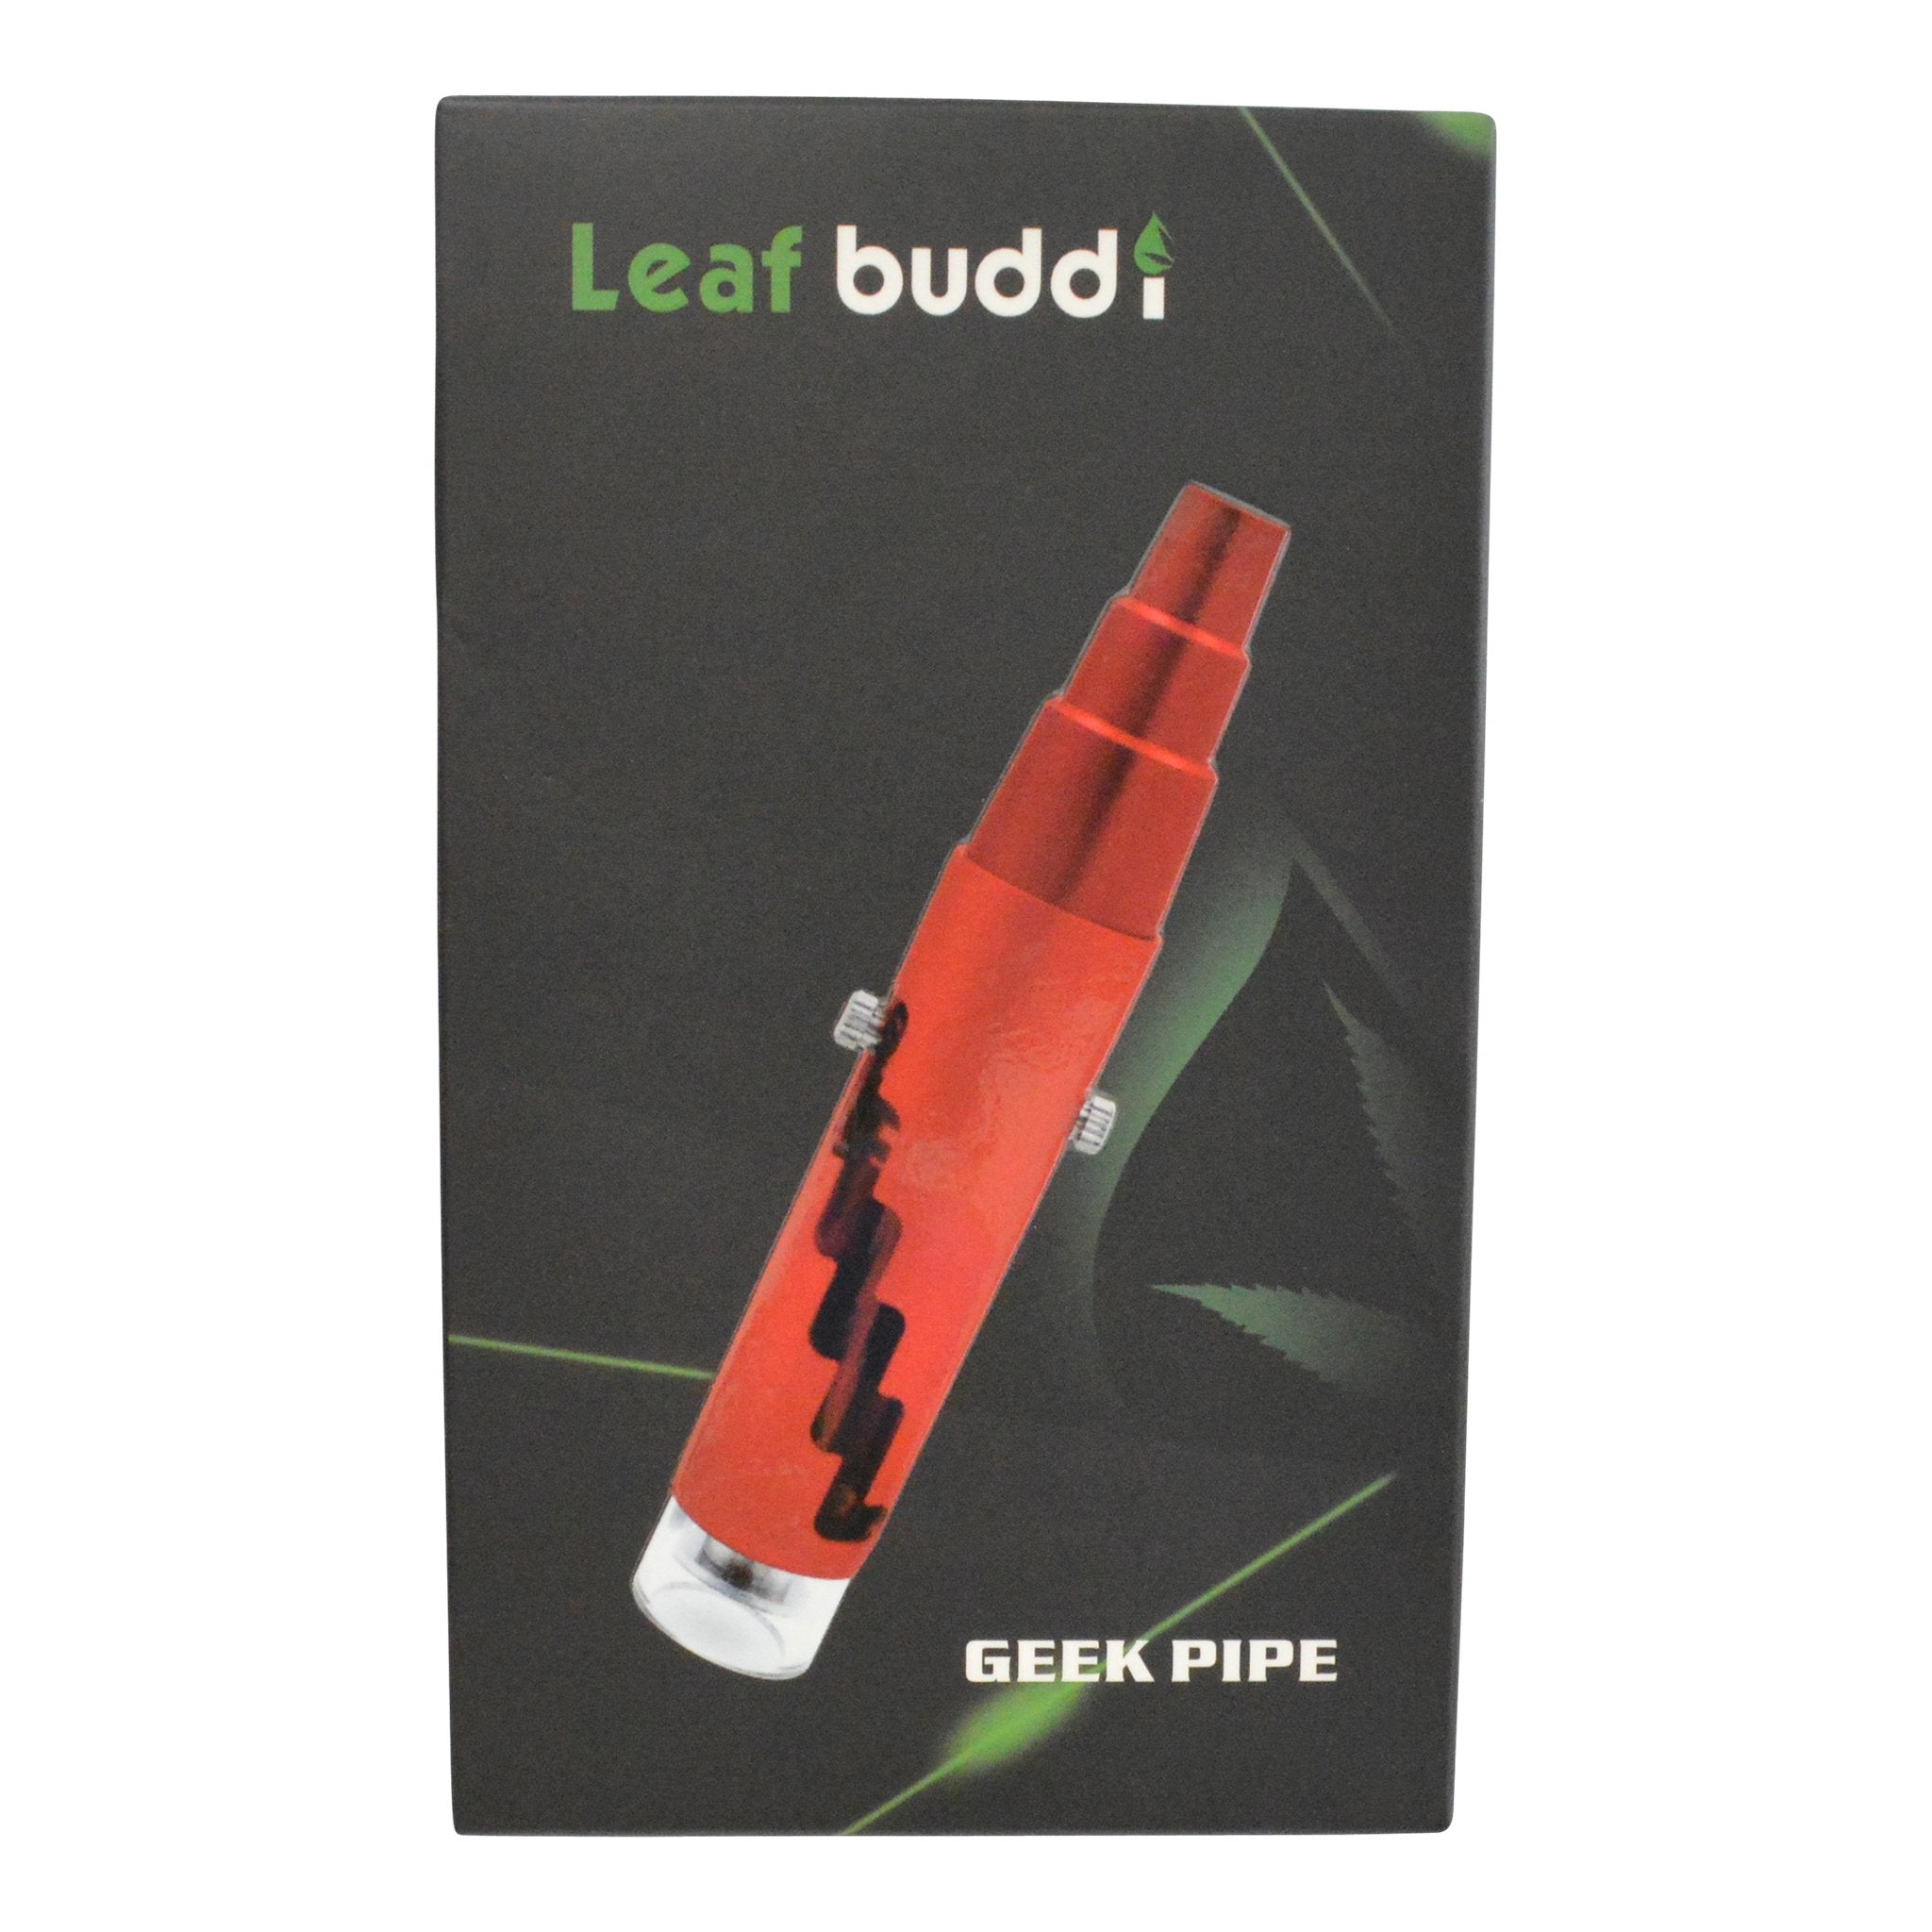 Leaf Buddi Geek Pipe - 5.5in